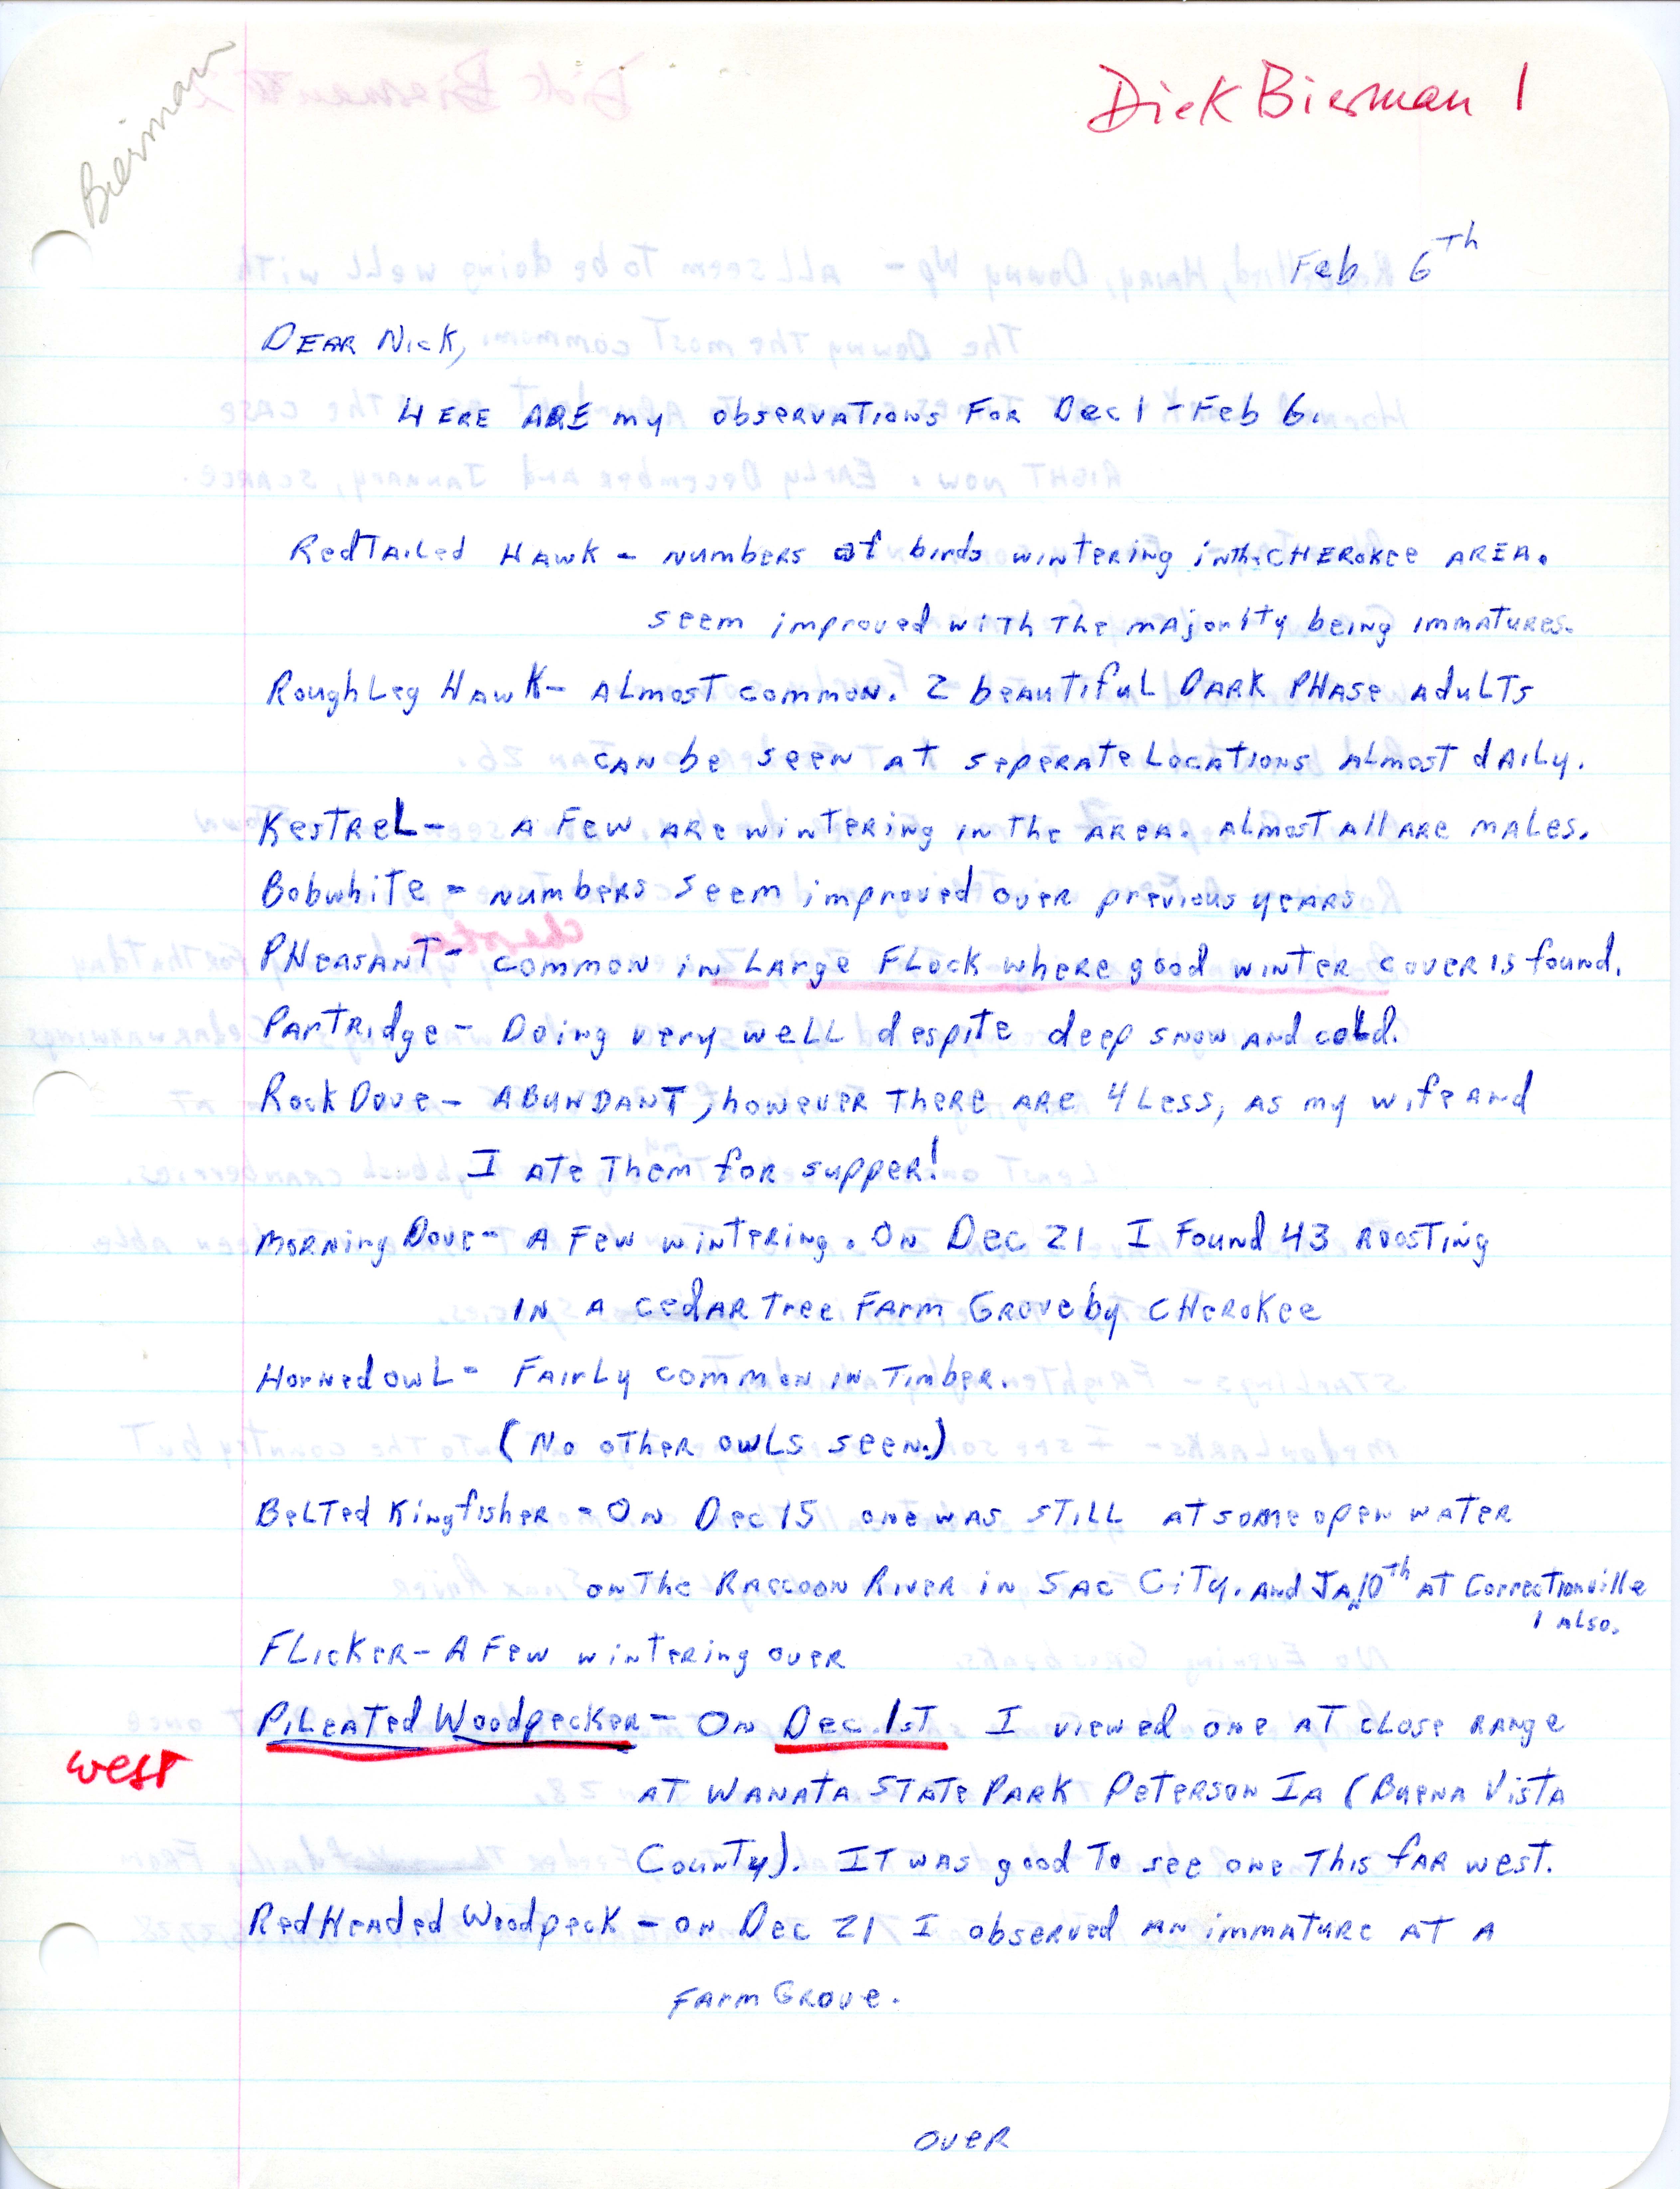 Dick Bierman letter to Nicholas S. Halmi regarding winter bird sightings, February 6, 1979